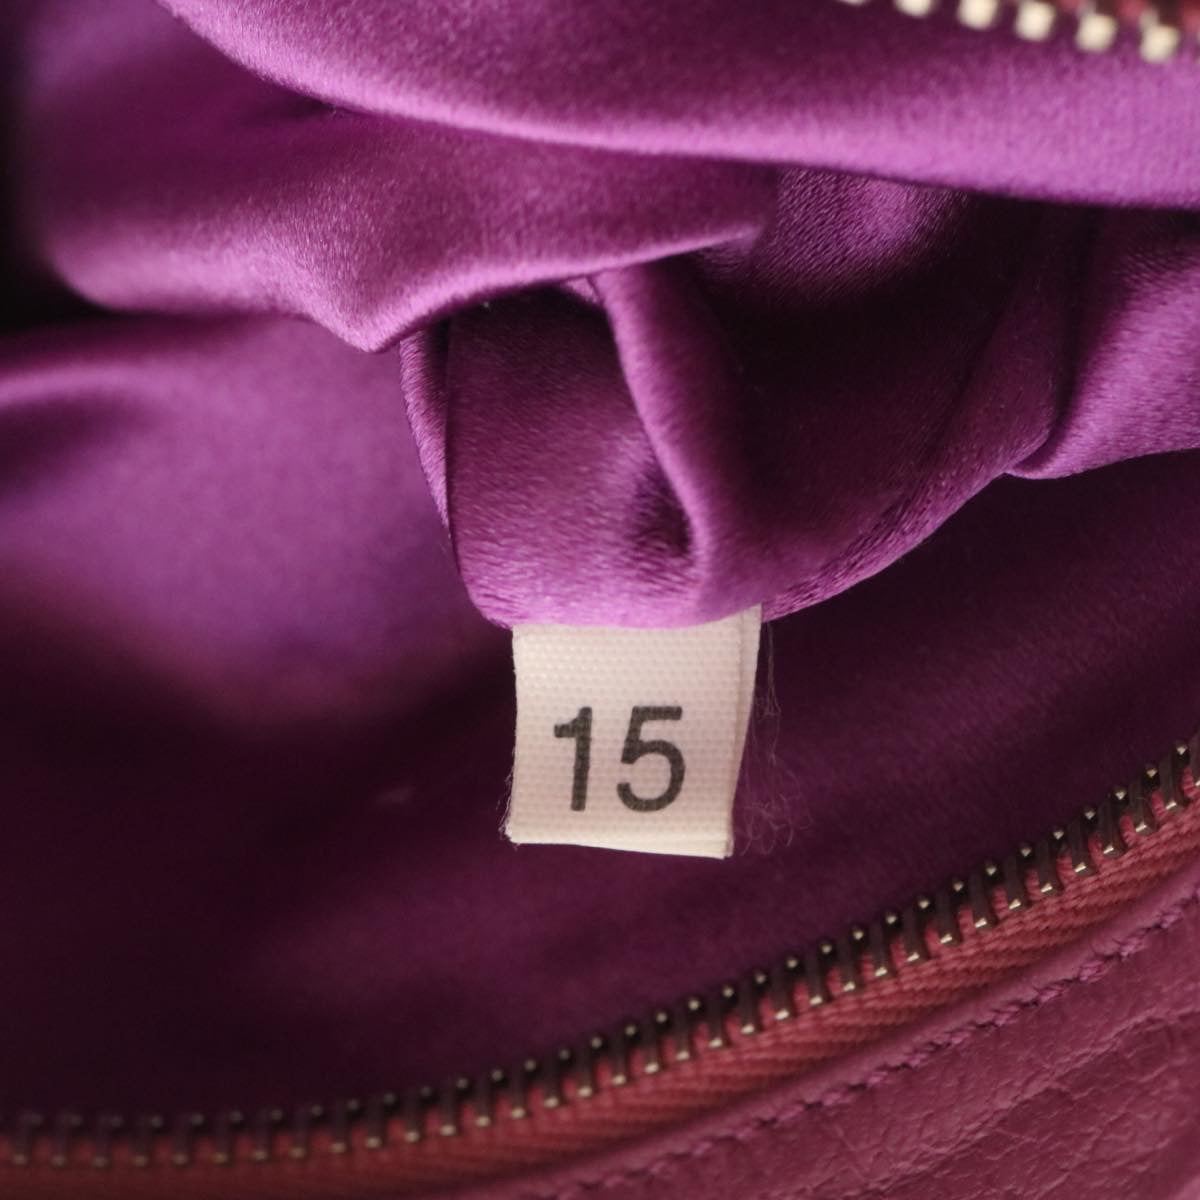 PRADA Chain Shoulder Bag Leather Purple Auth am1163g